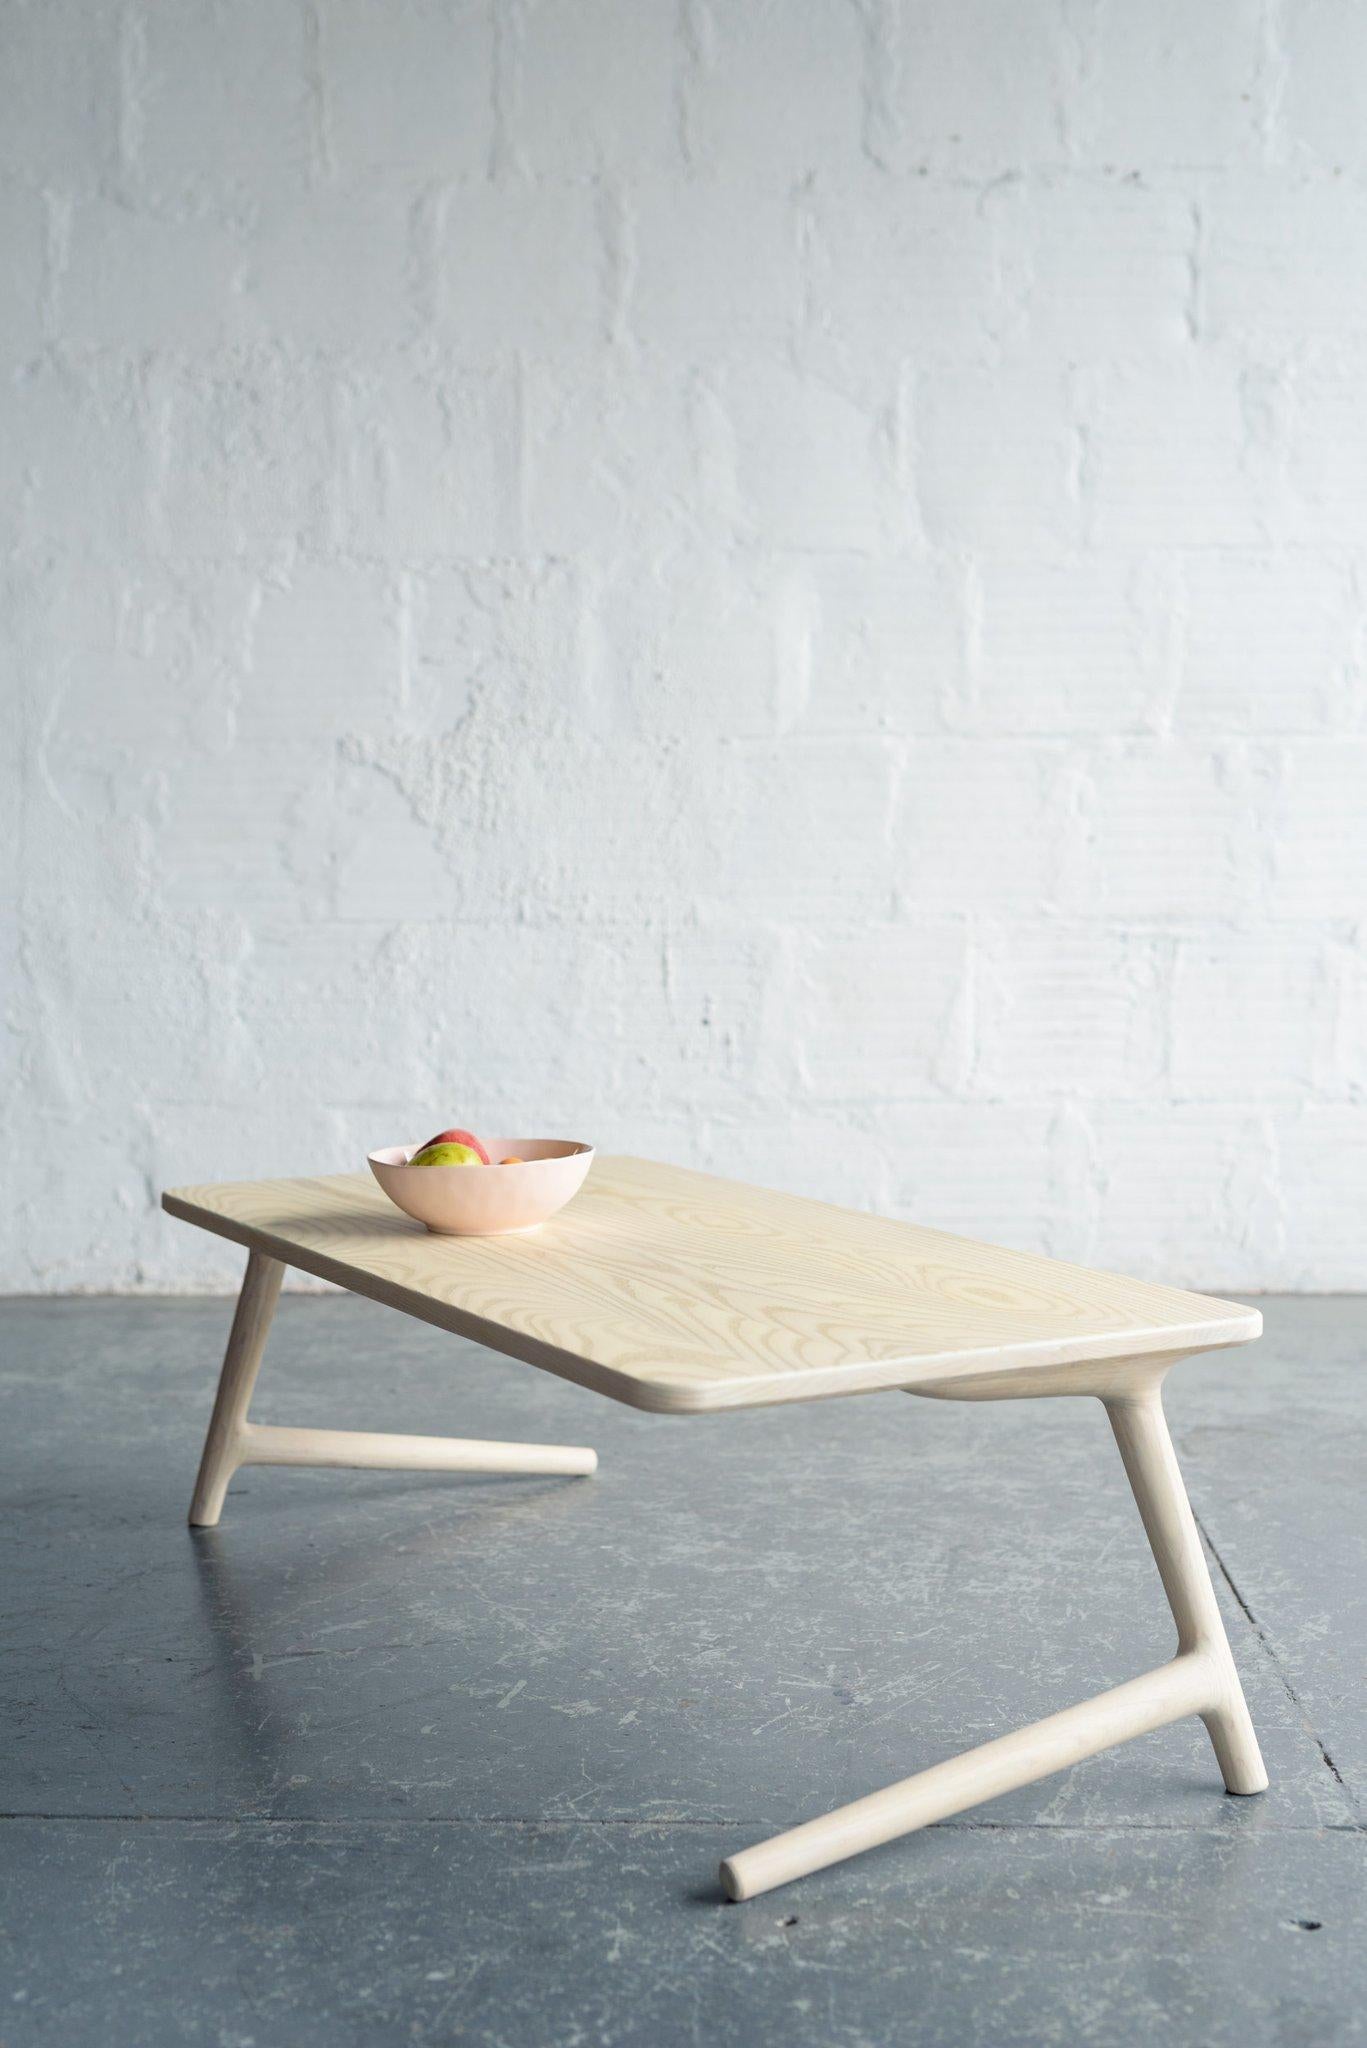 Table basse en frêne blanc par Fernweh Woodworking
Dimensions : 
L 24